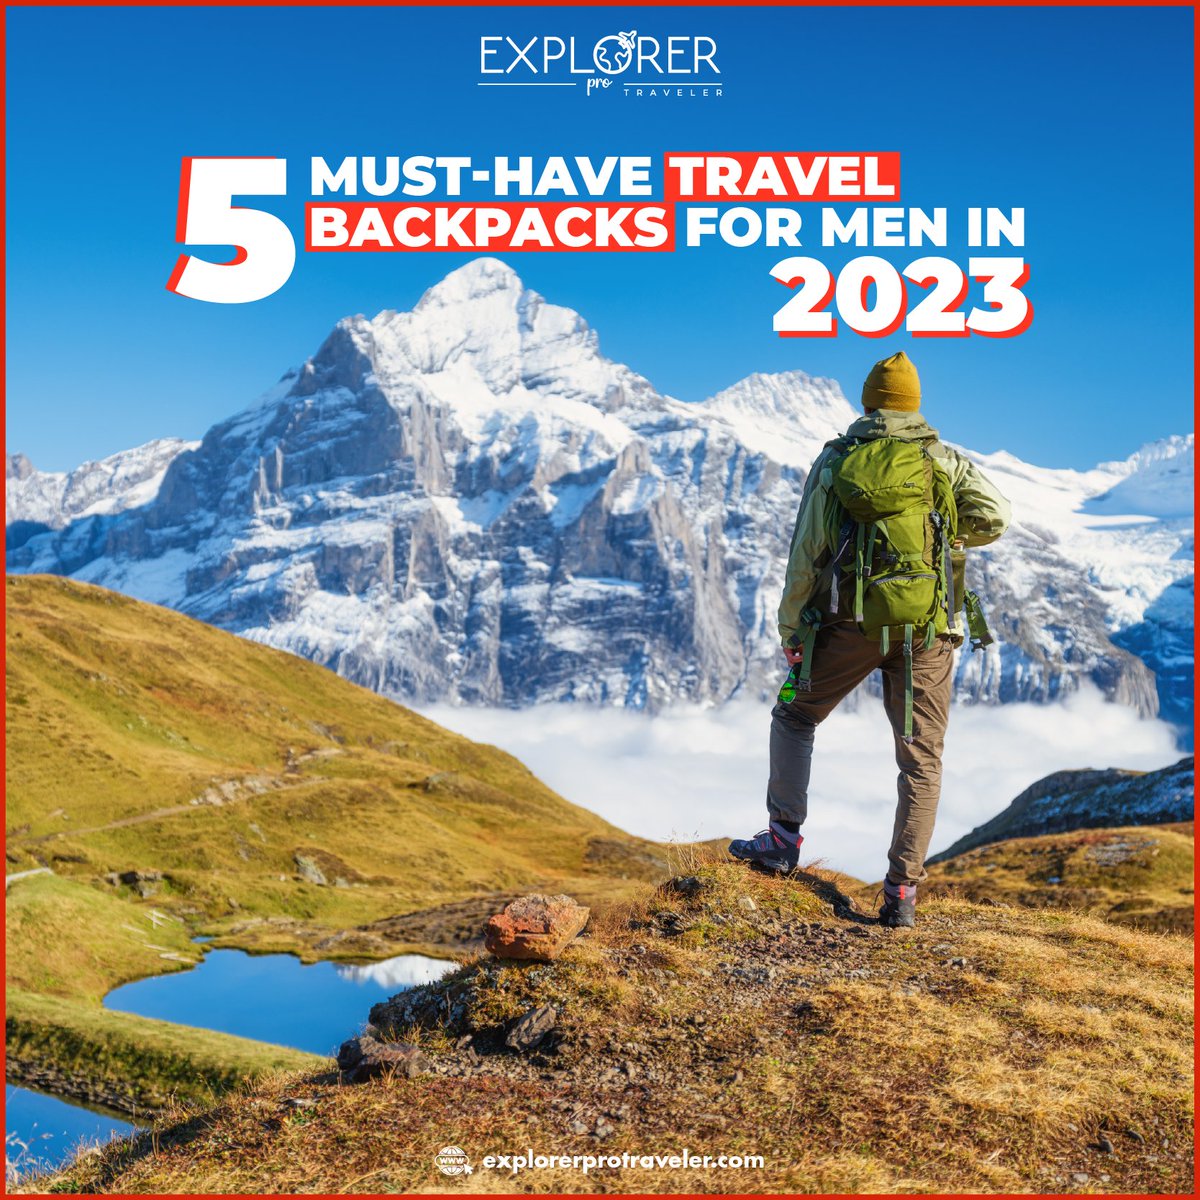 Explore in Style with the 5 Must-Have Travel Backpacks for Men! 🎒

#explorerprotraveler #travelbackpacks #backpacking #travelgear #explorerprotraveler #musthaves #adventureawaits #travelstyle #backpackessentials #packsmart #wanderlust